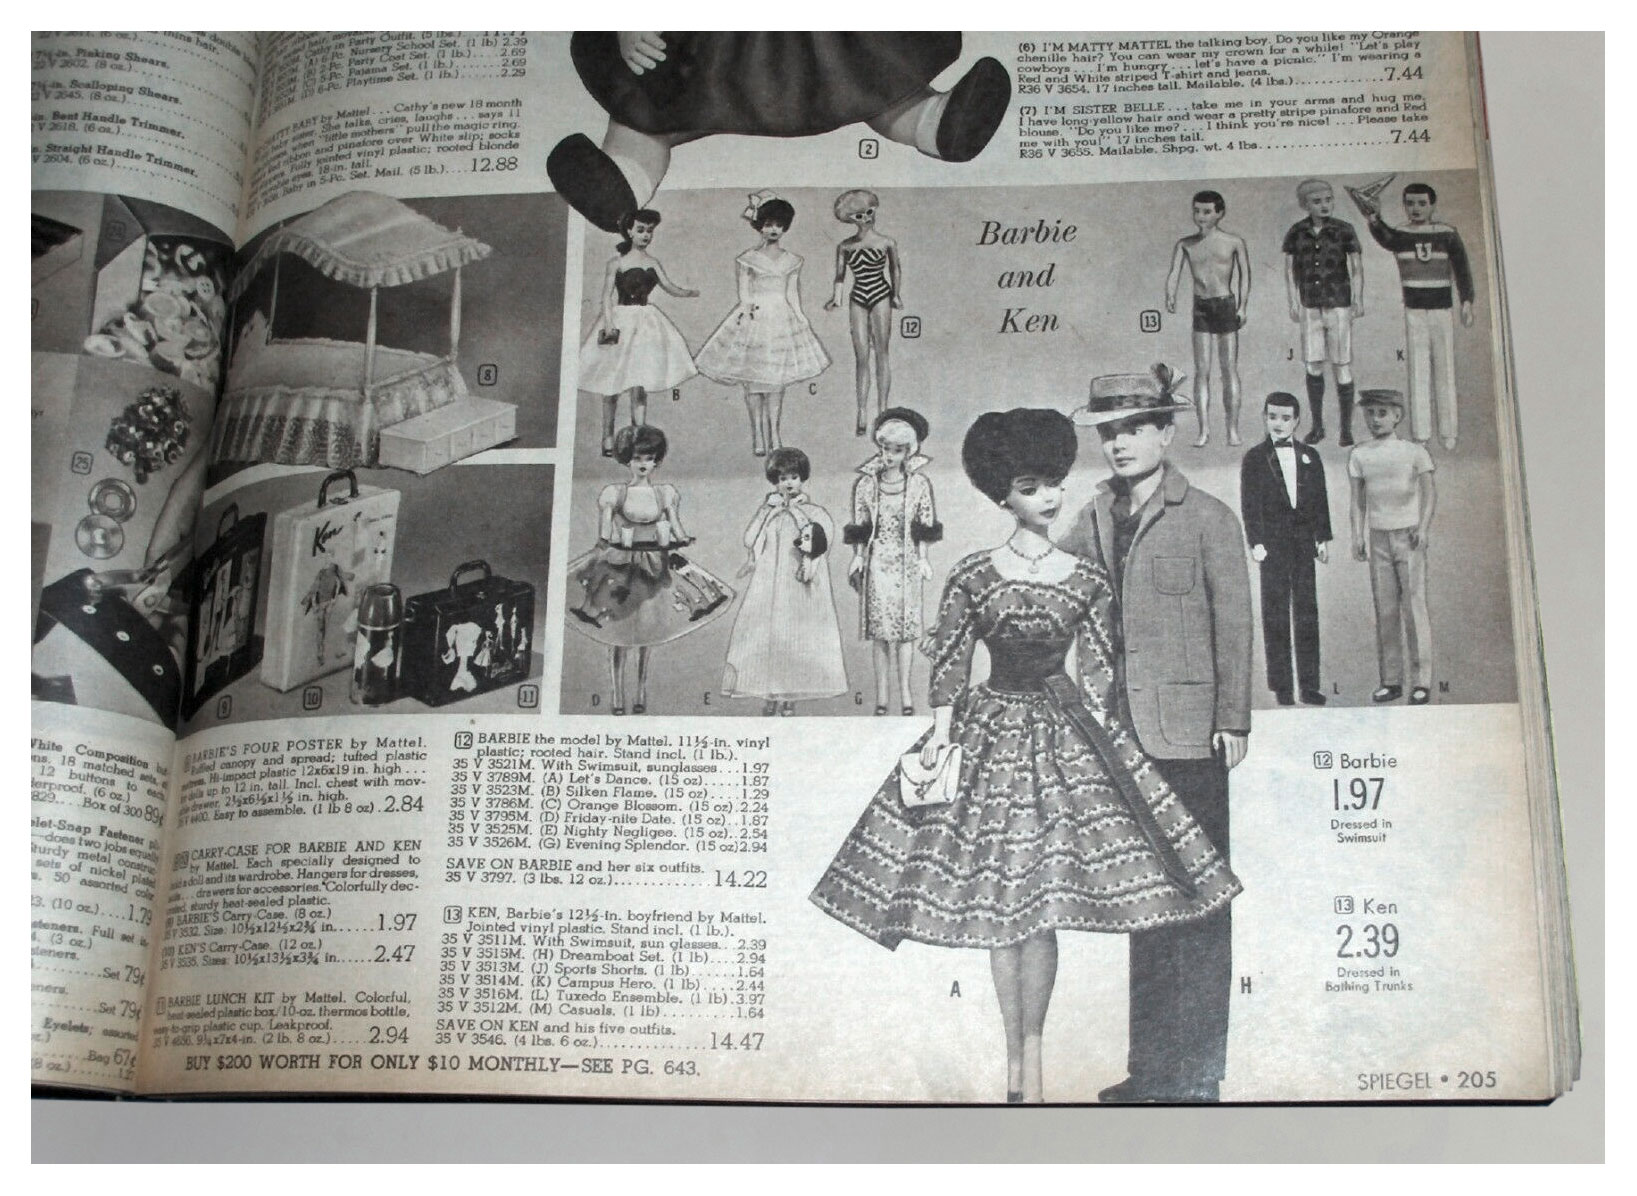 From 1962 Spiegel Fall Winter catalogue